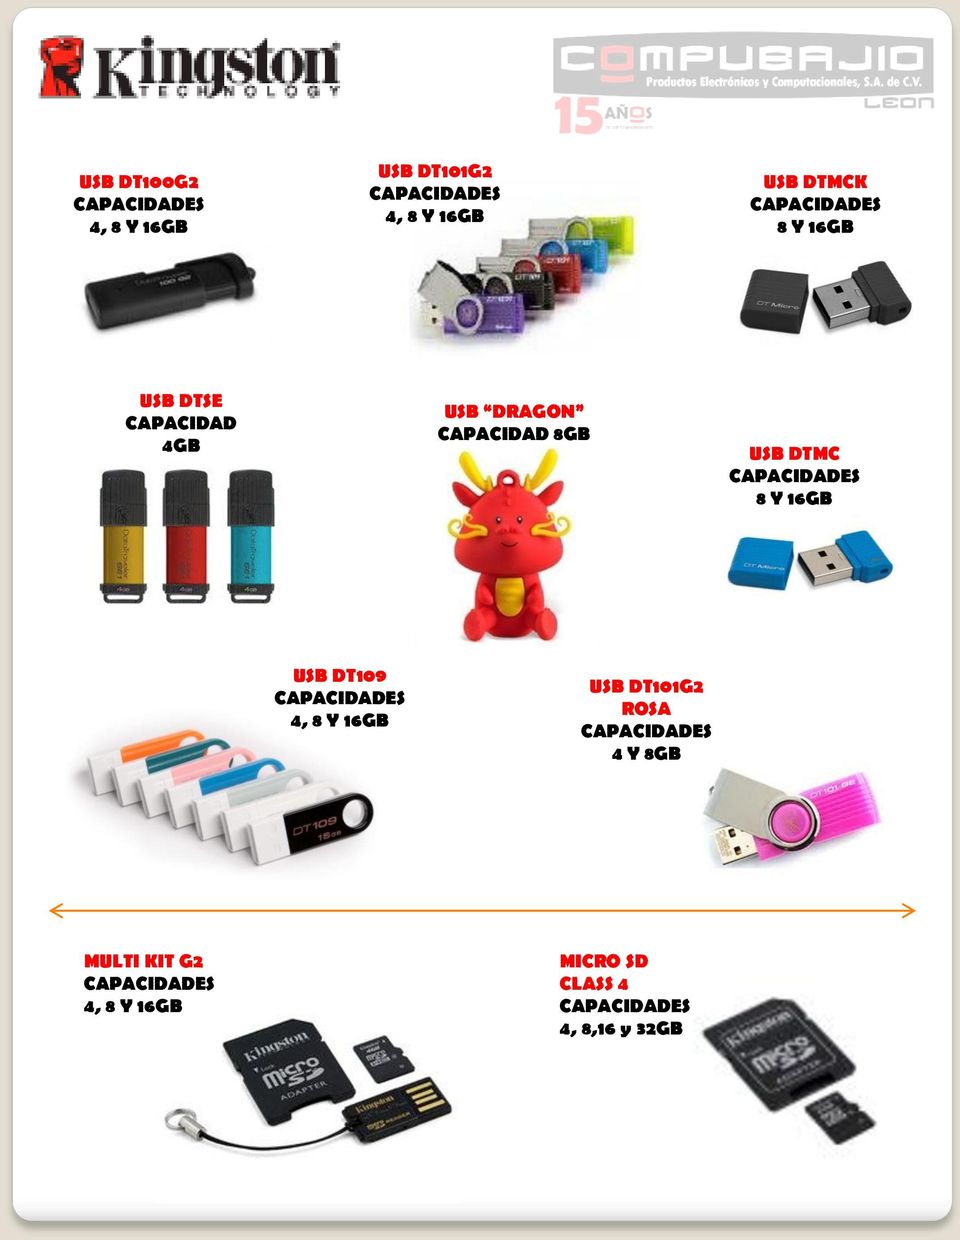 CAPACIDADES 8 Y 16GB USB DT109 CAPACIDADES 4, 8 Y 16GB USB DT101G2 ROSA